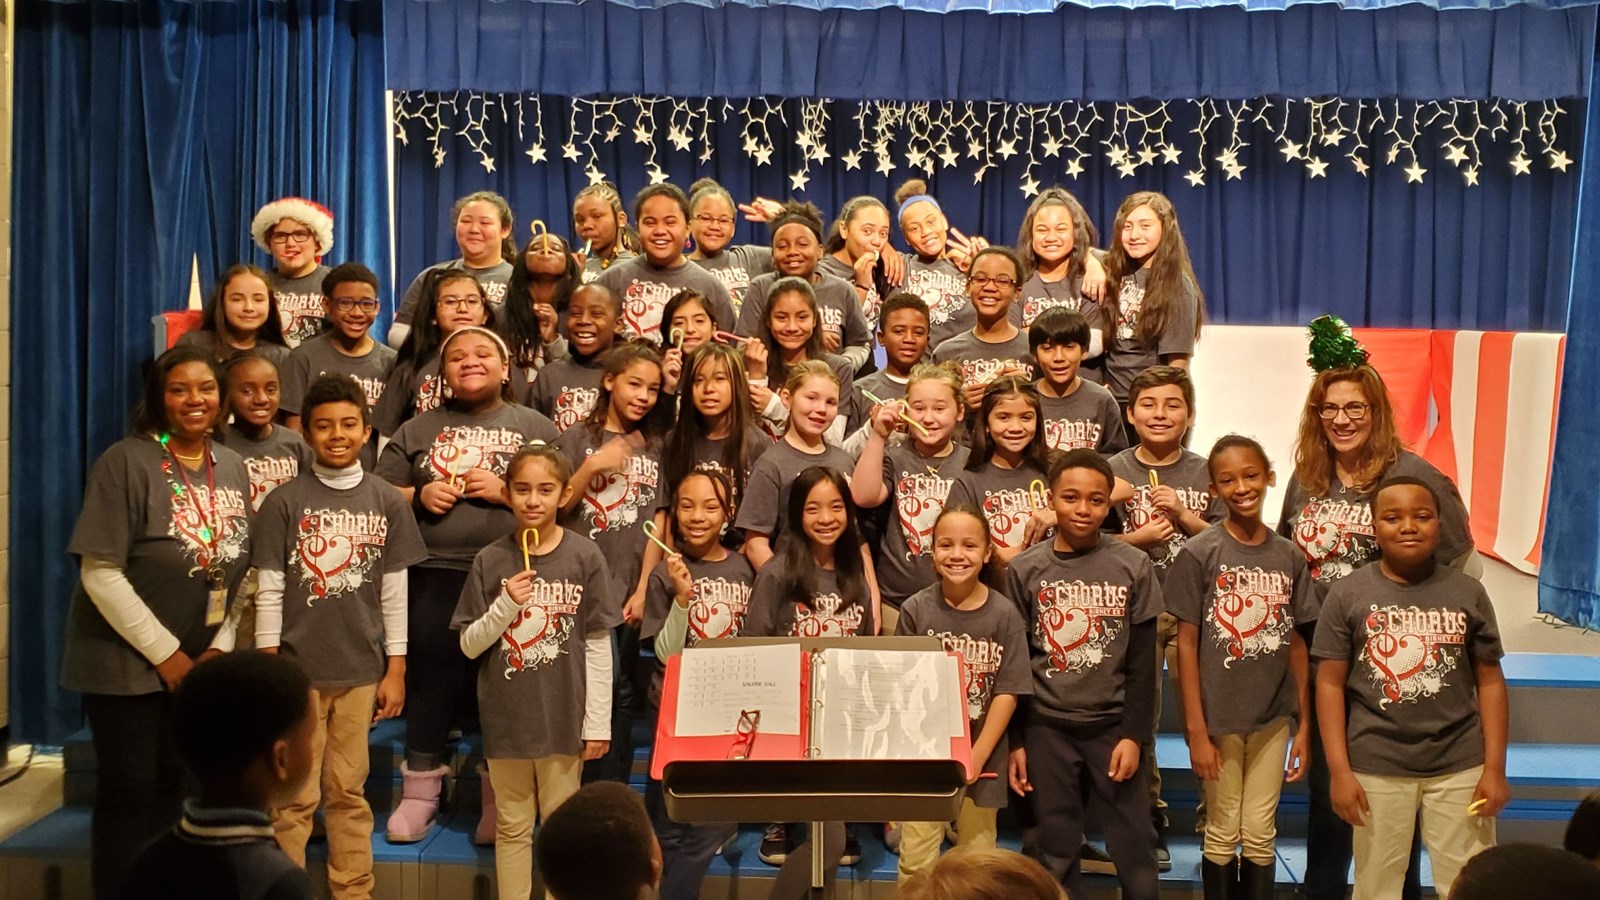 Birney Elementary School's chorus holiday performance